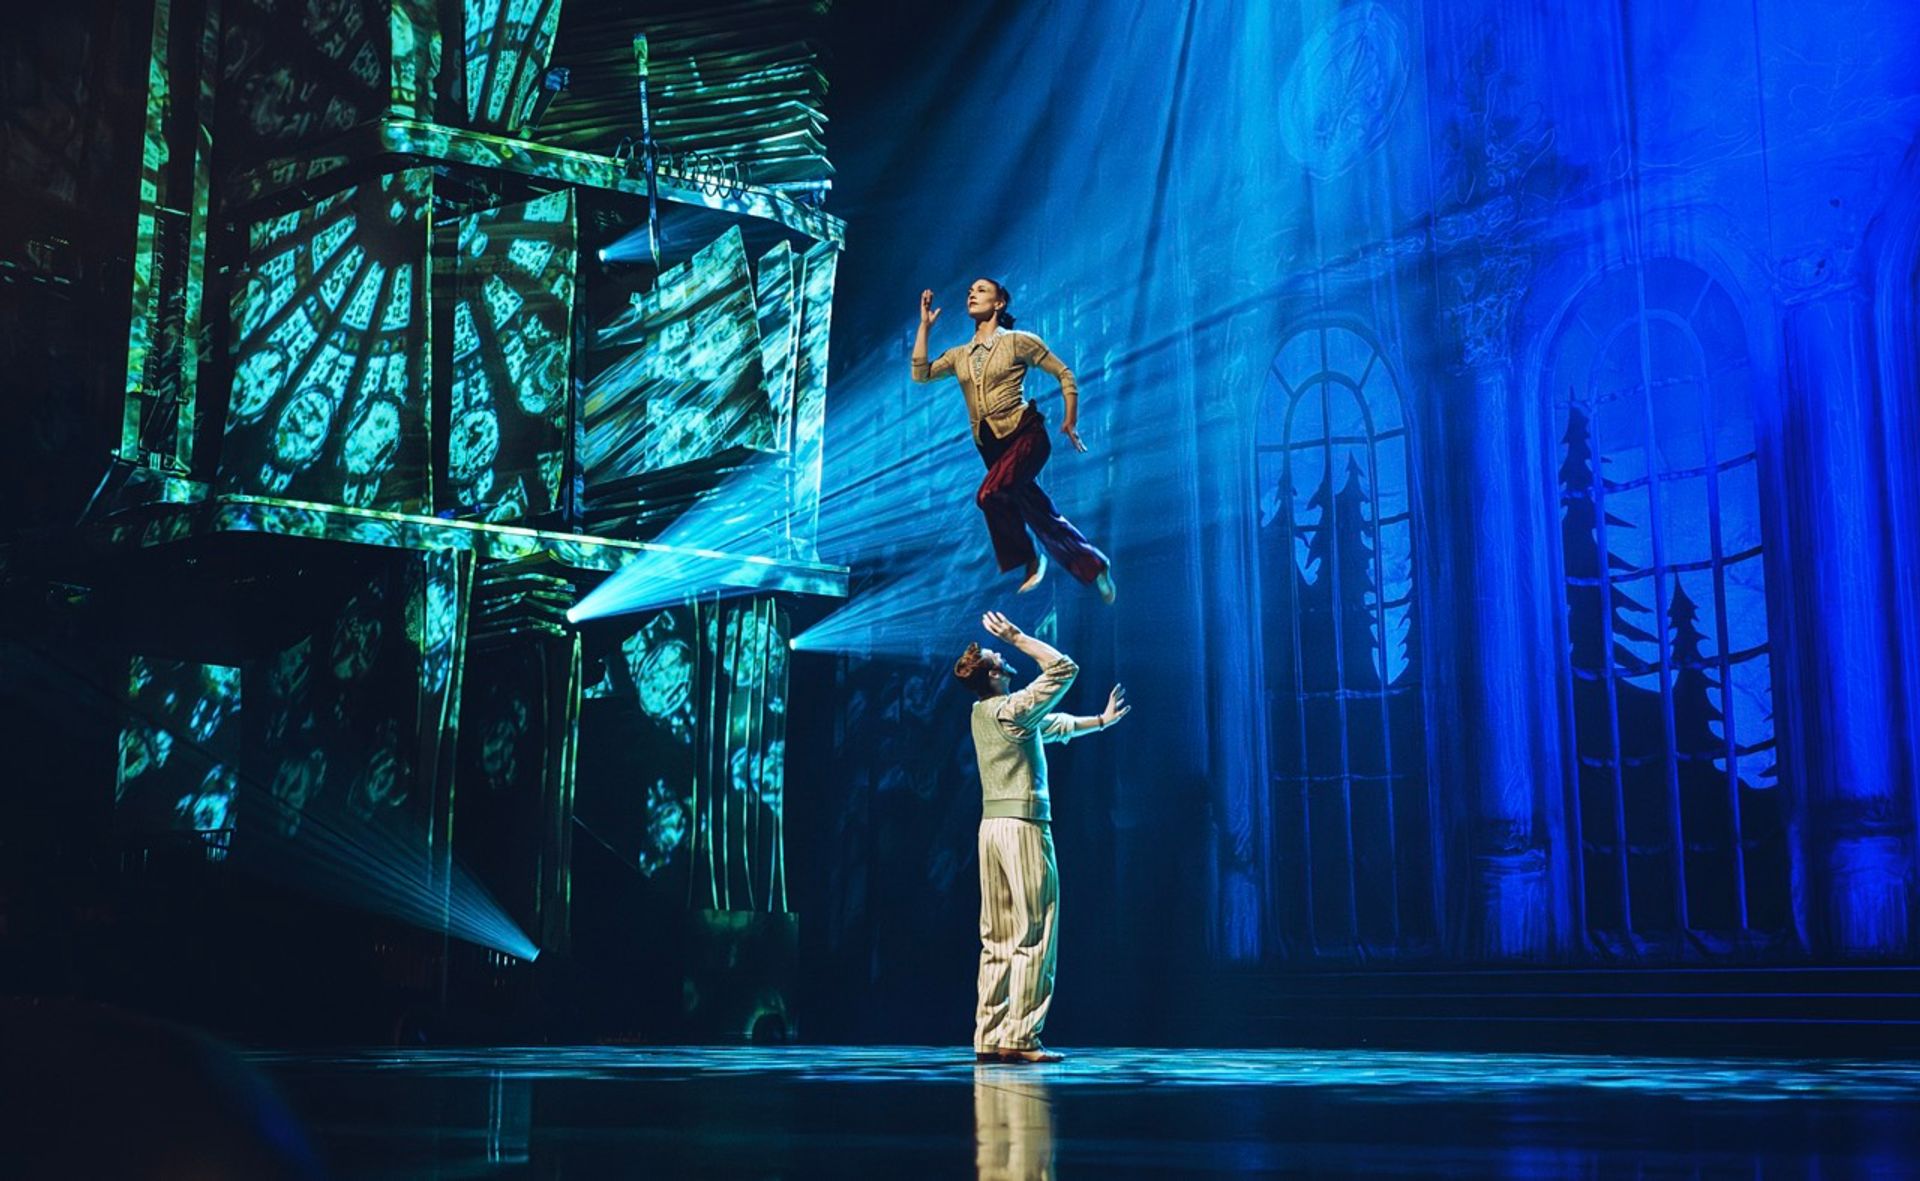 "Drawn to Life" Live Show Presented by Cirque du Soleil & Disney image 1